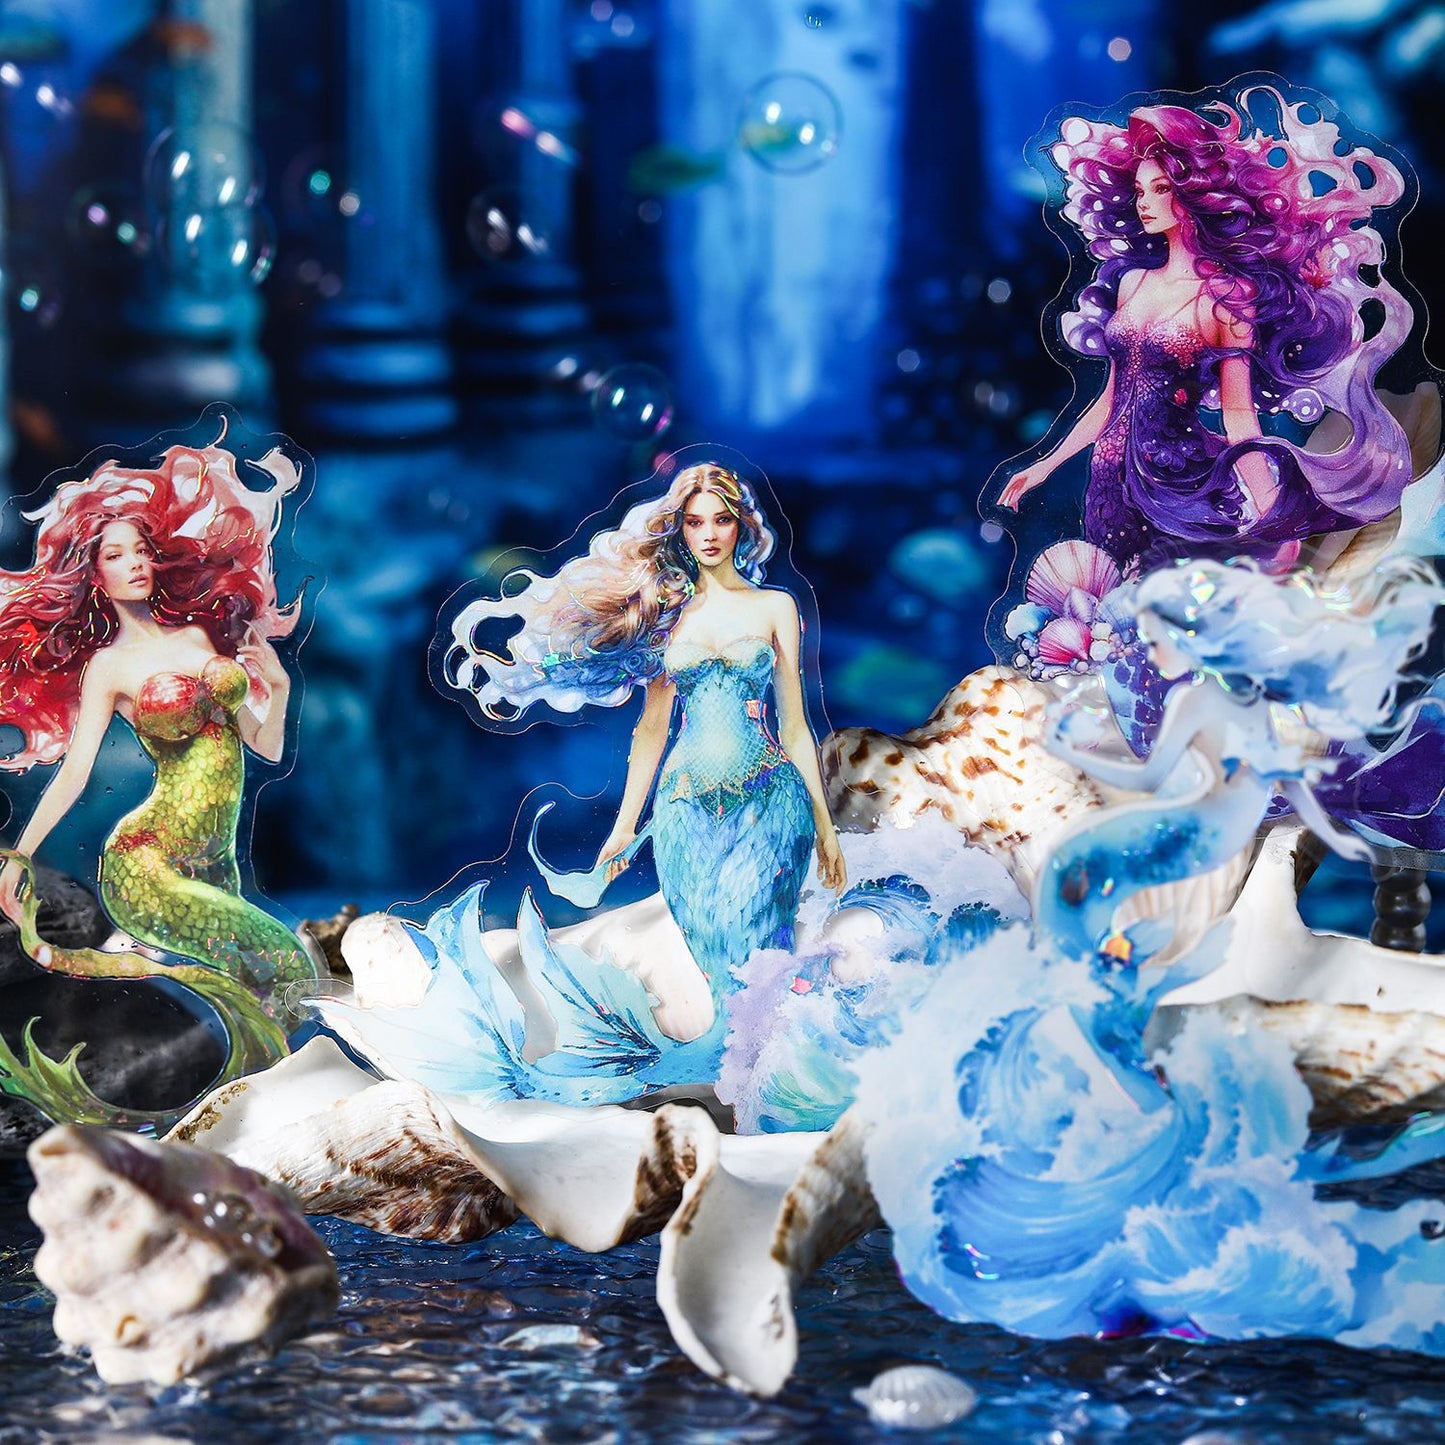 Mermaid Fairytale Series Stickers